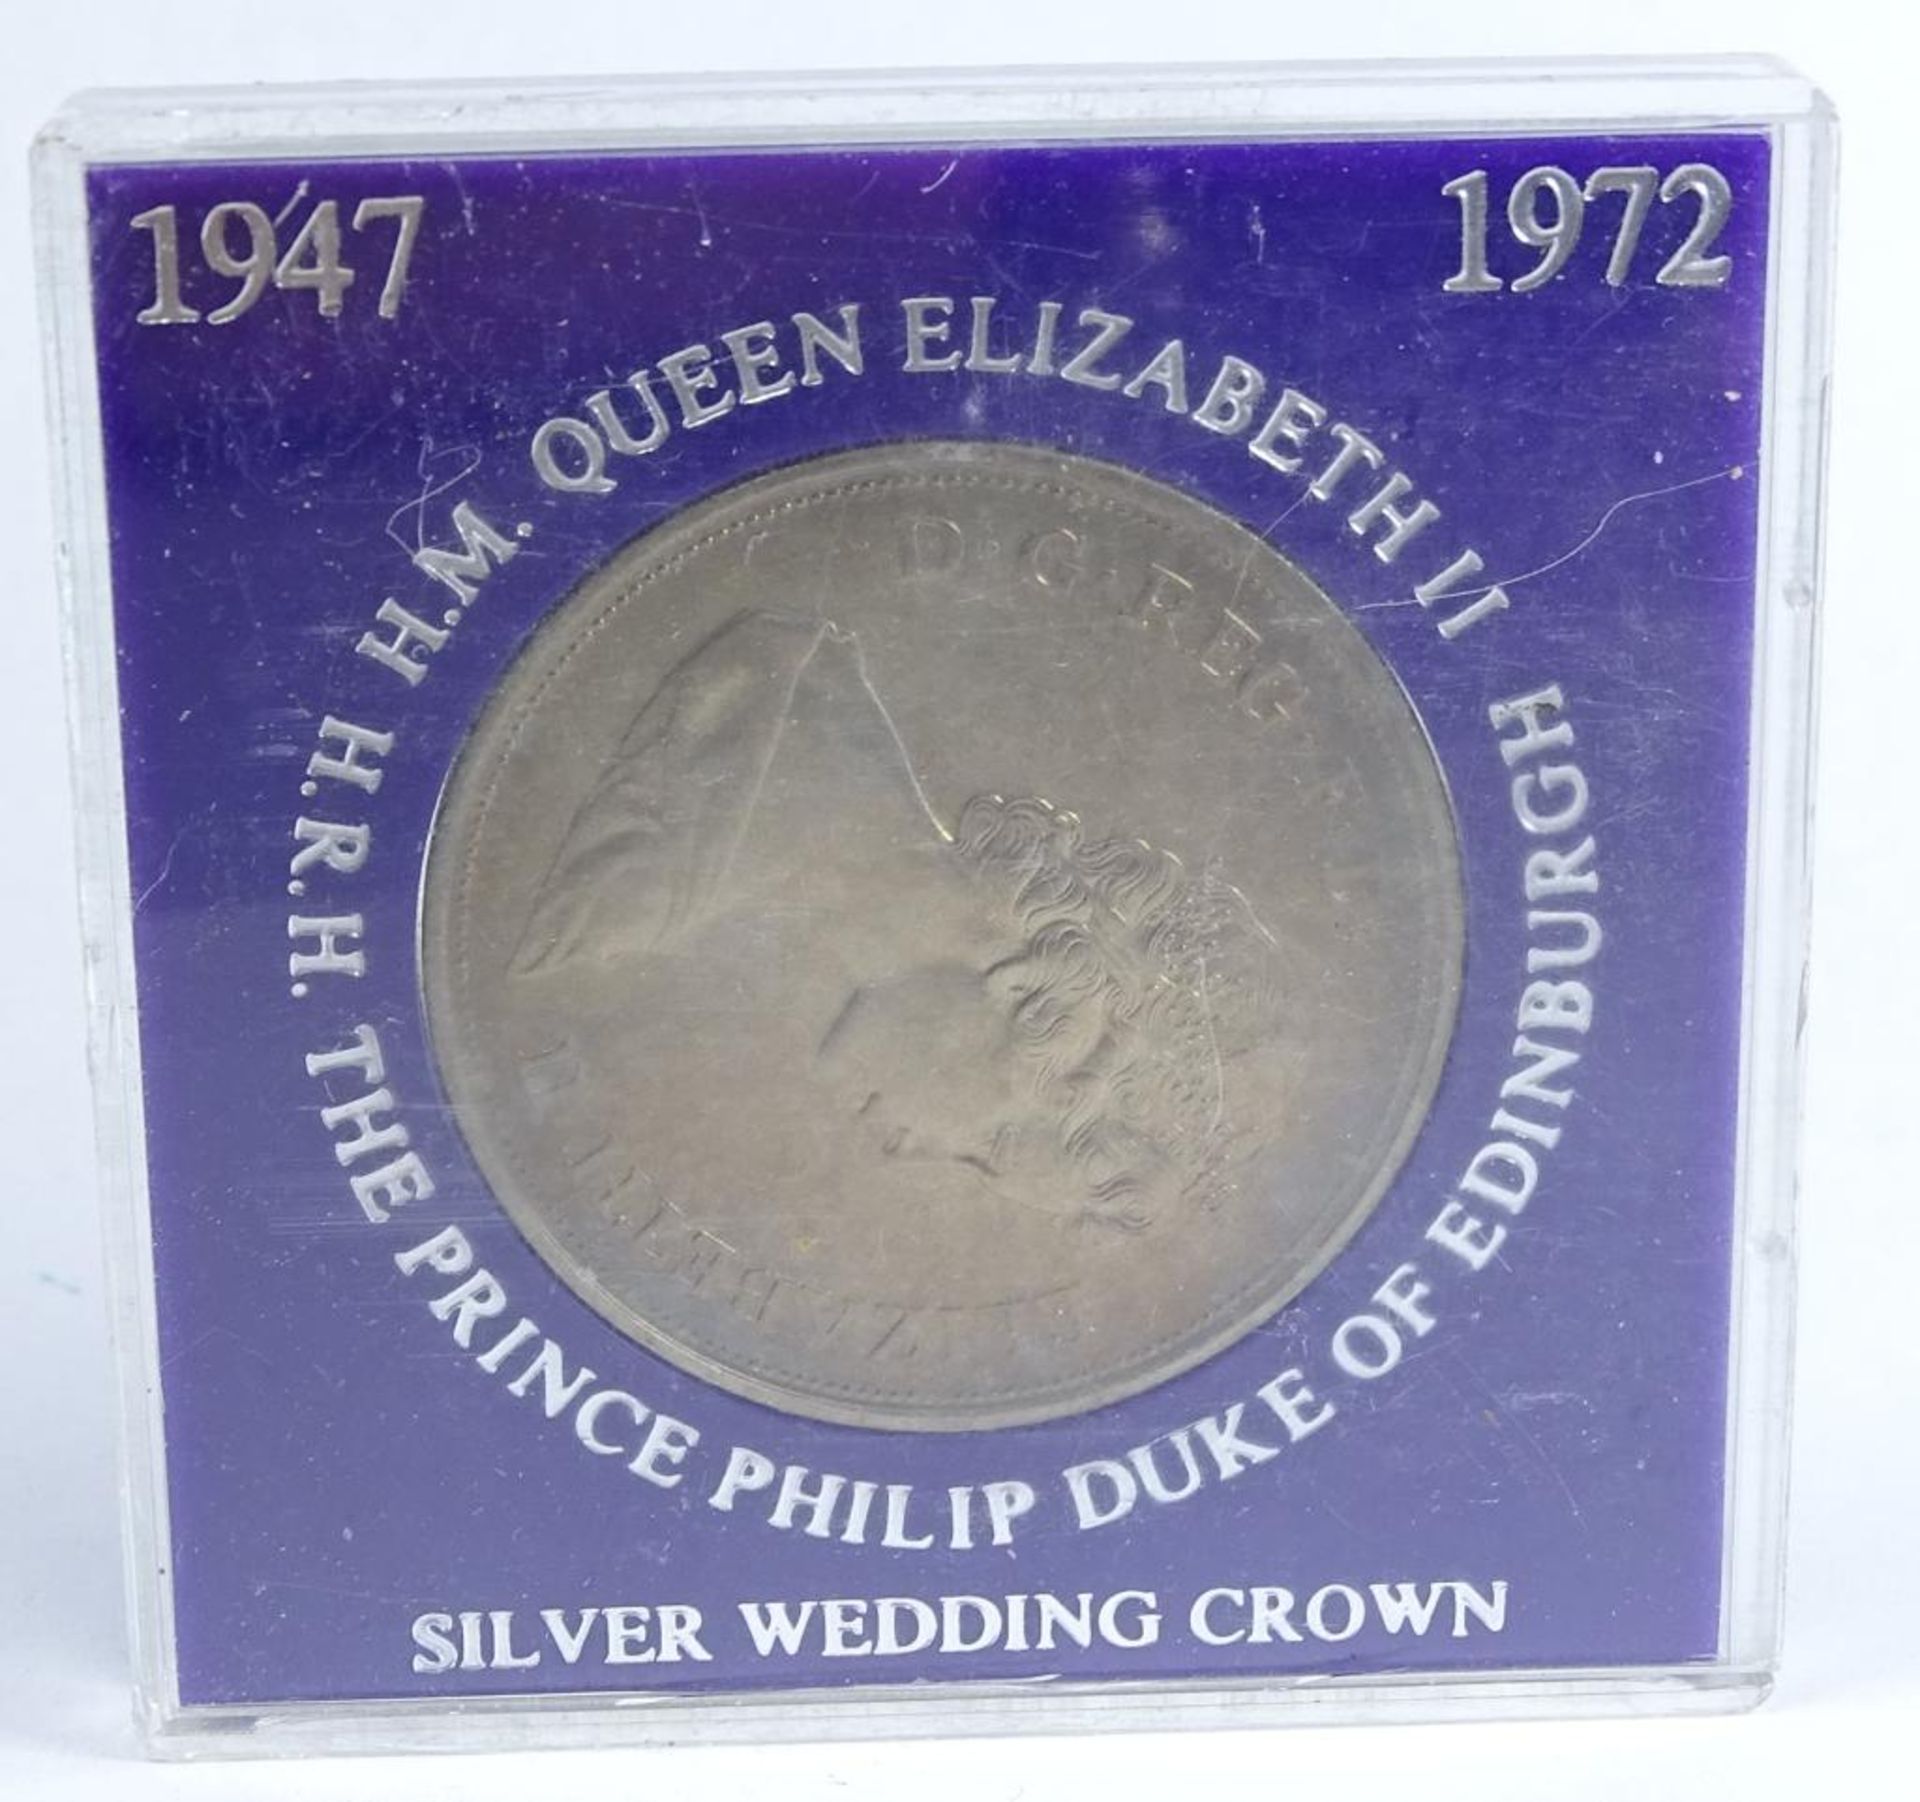 Silver Wedding Crown,Queen Elizabeth II, 1947 1972